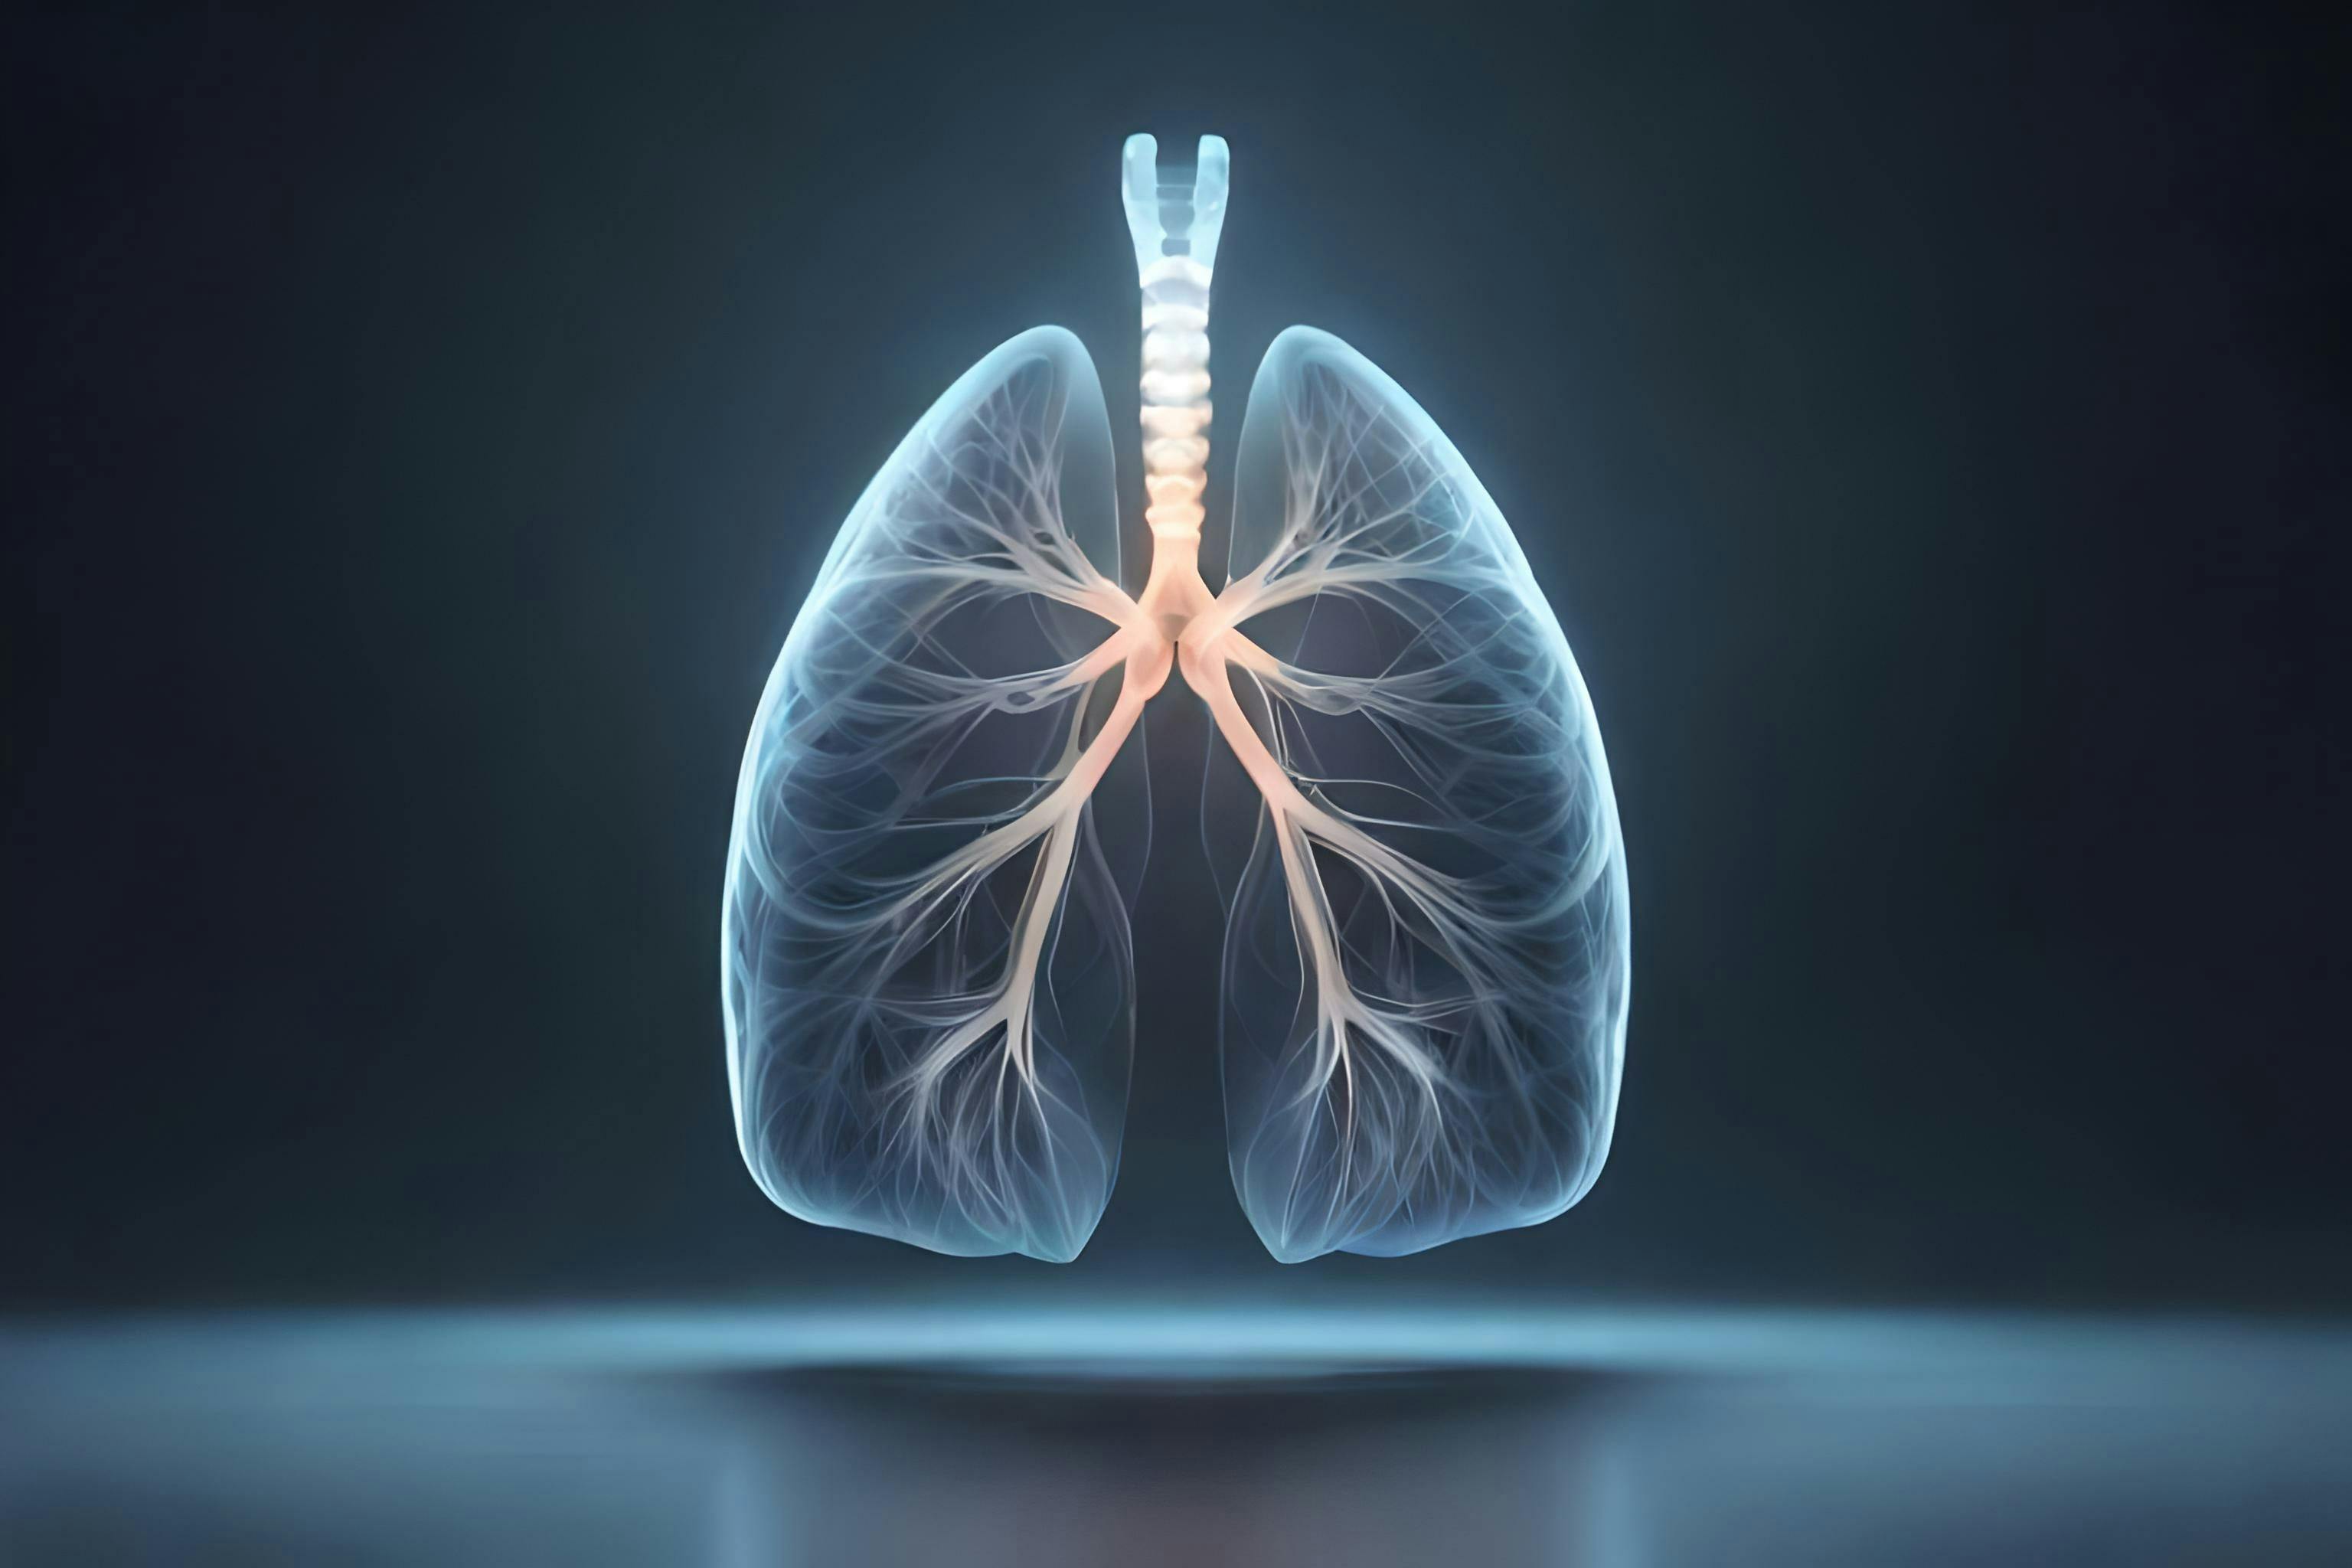 human anatomy and smoky lungs© vitanovski - stock.adobe.com